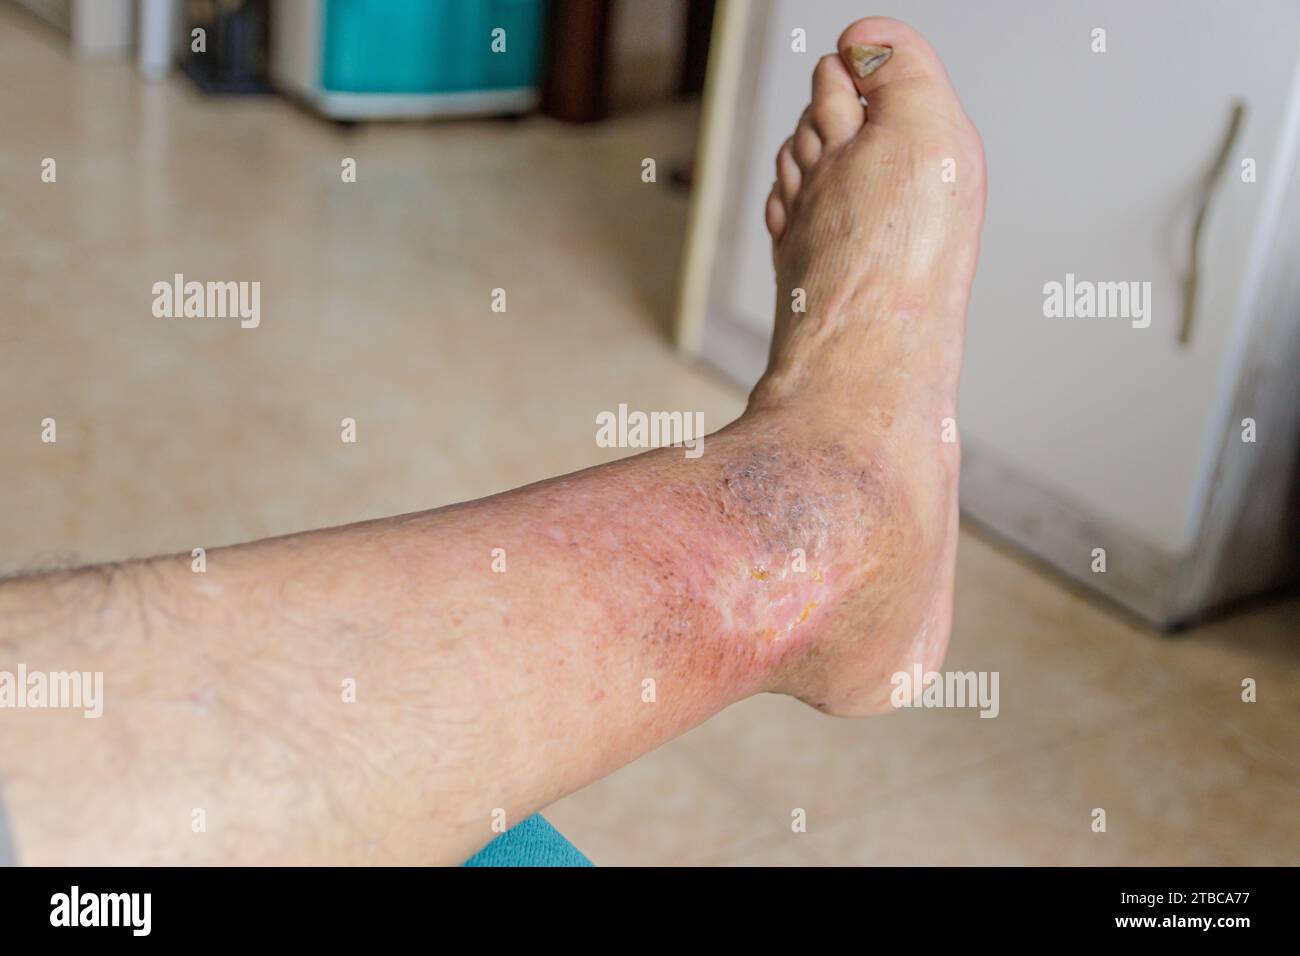 Leg senior person with ulcer due to diabetes Stock Photo